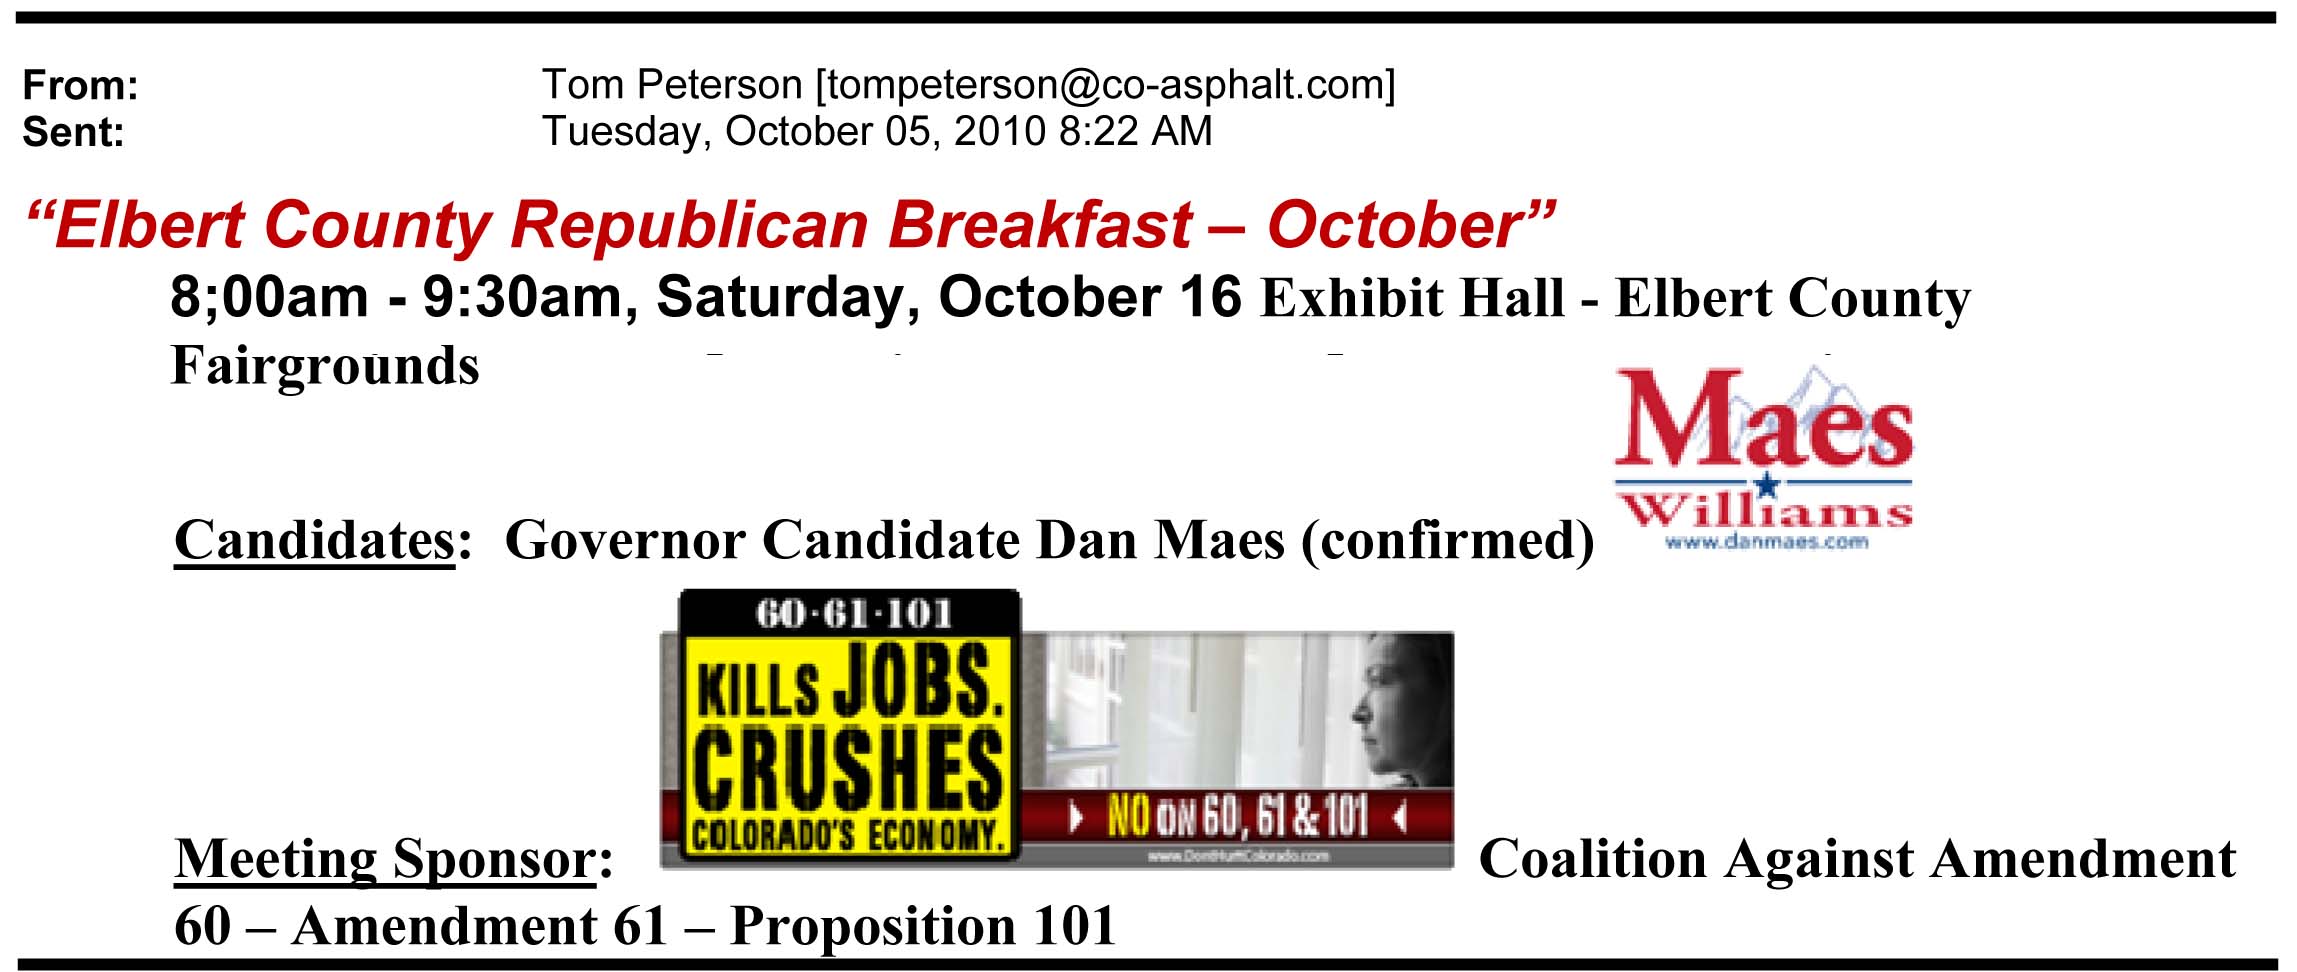 Tom Peterson's Republican Breakfast Announcement